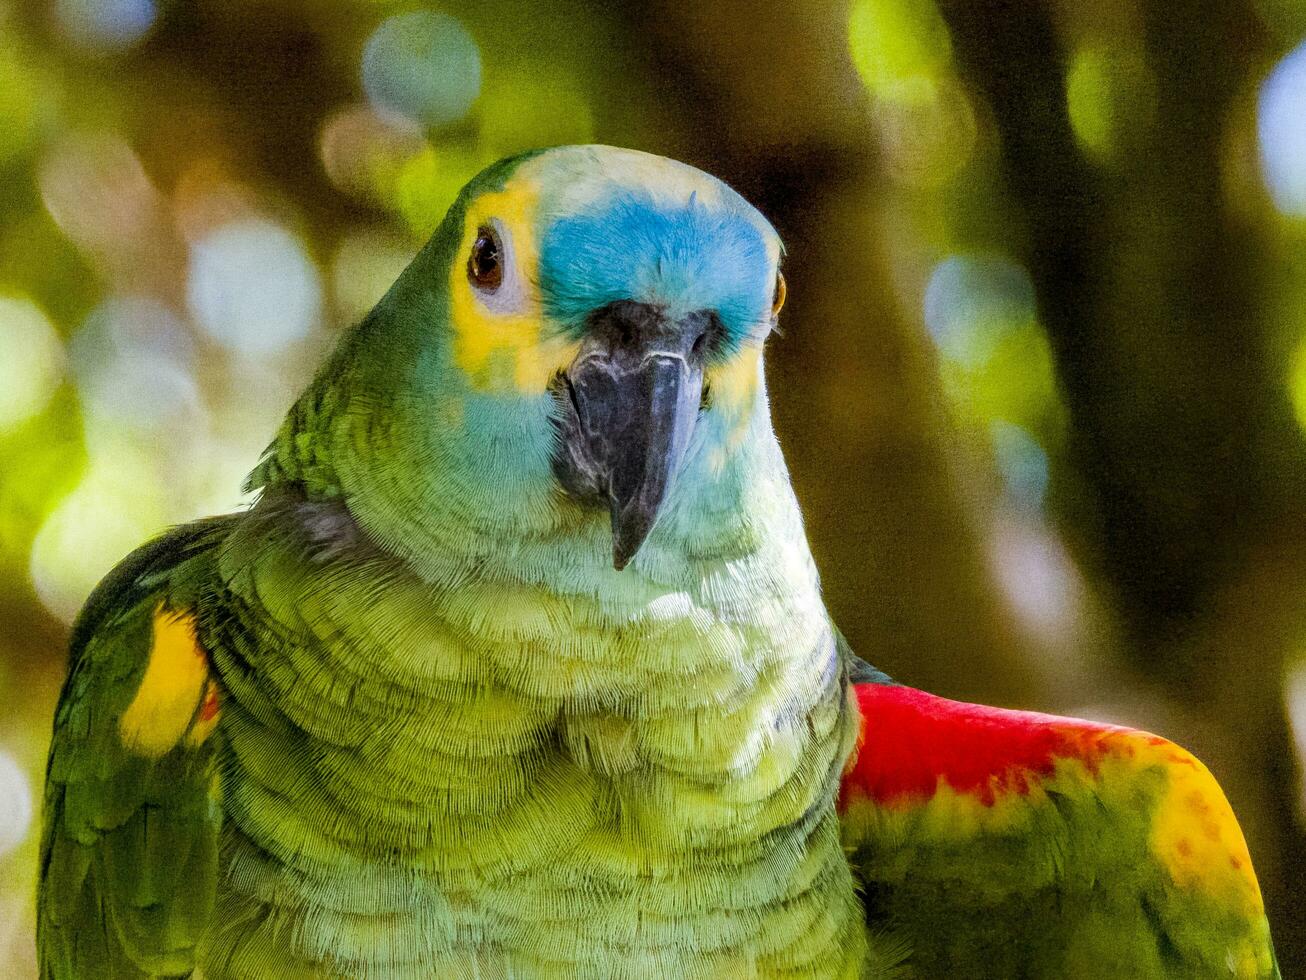 blauwvoorhoofd amazon papegaai foto